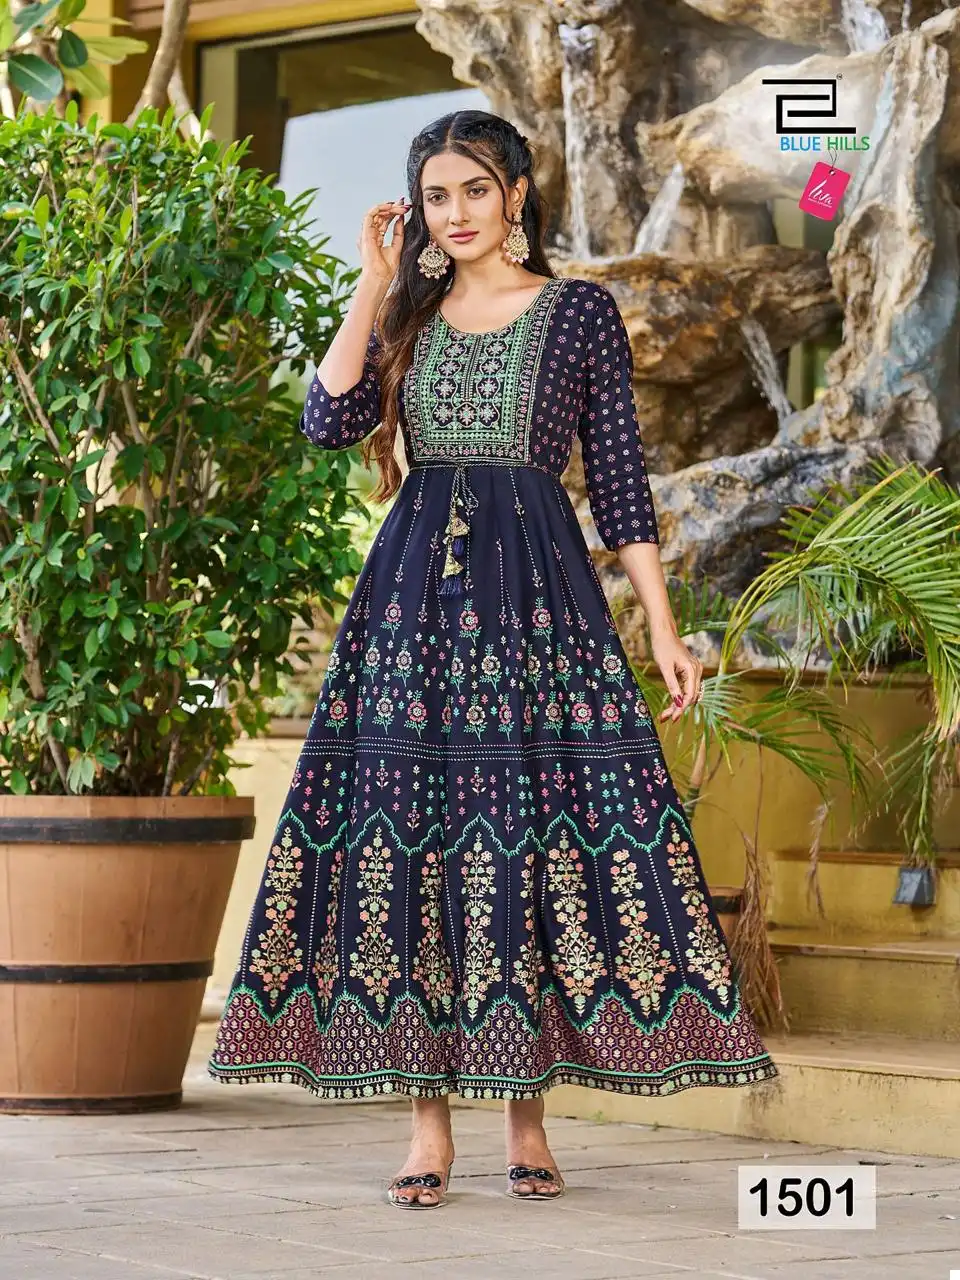 Diwali Dress 2021 - Latest Diwali Ethnic Outfit Trends